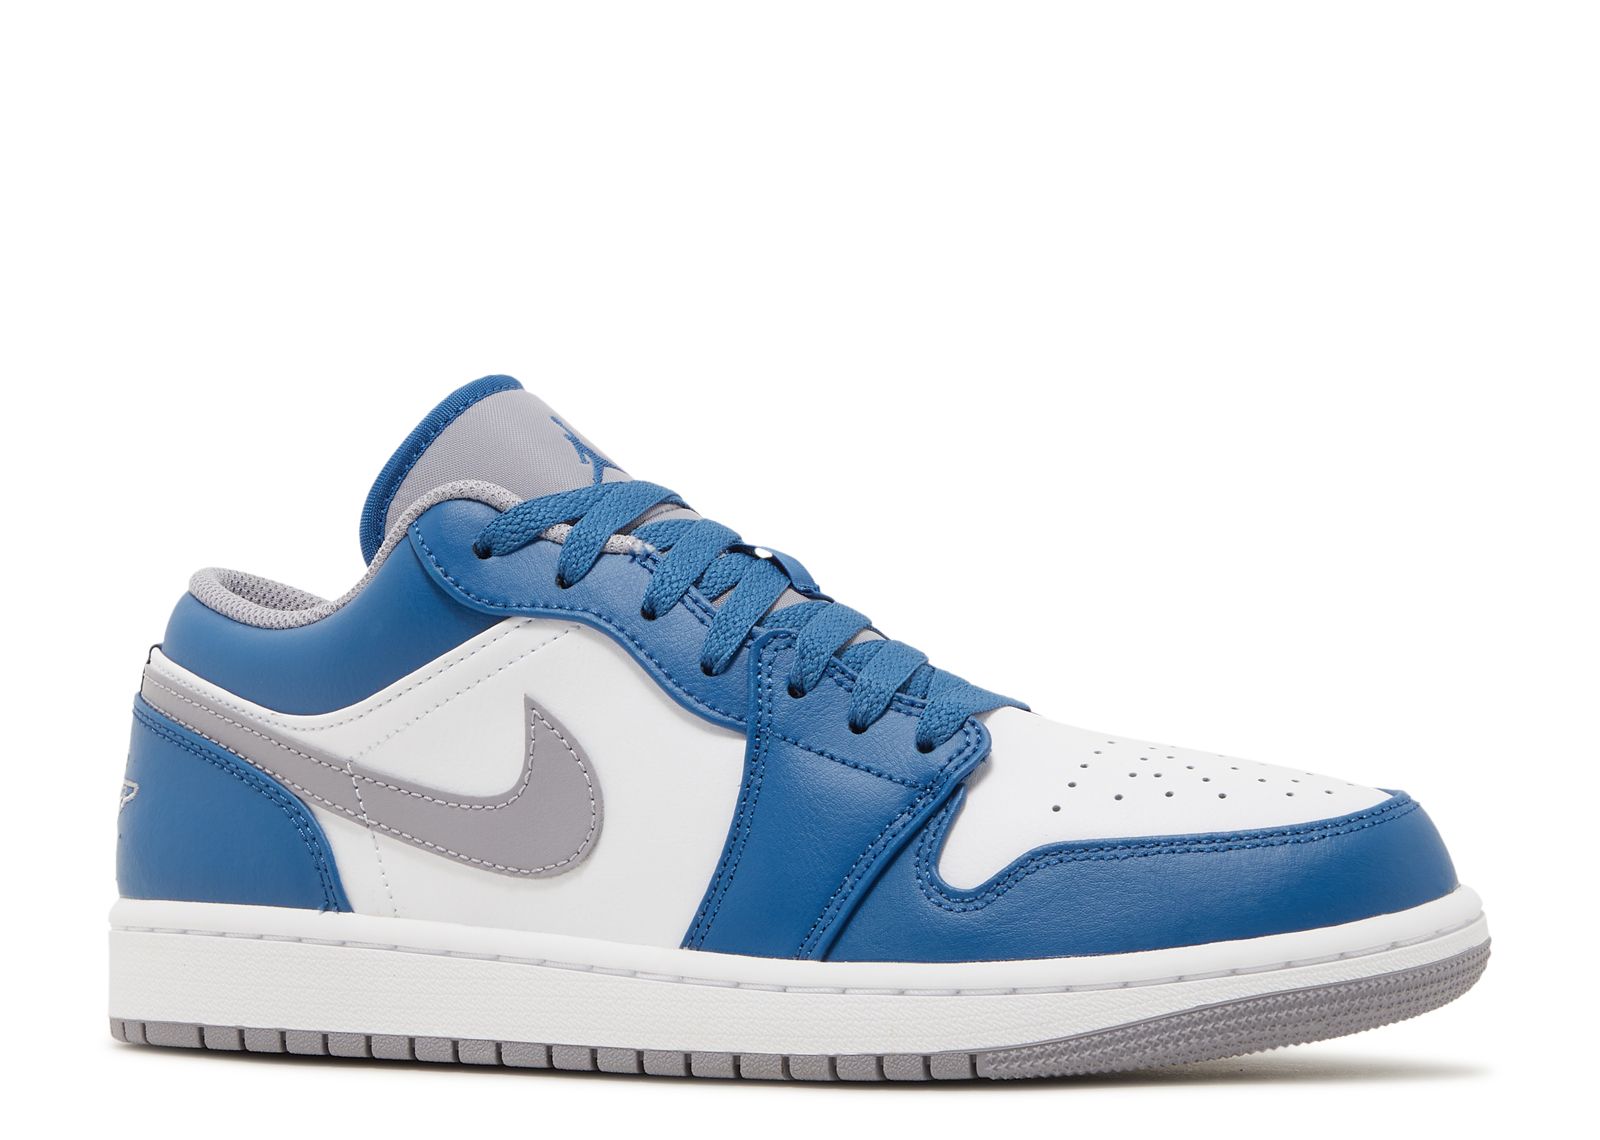 Nike Air Jordan 1 Low True Blue Cement Sneakers 553558-412 Men's & GS Sizes  New